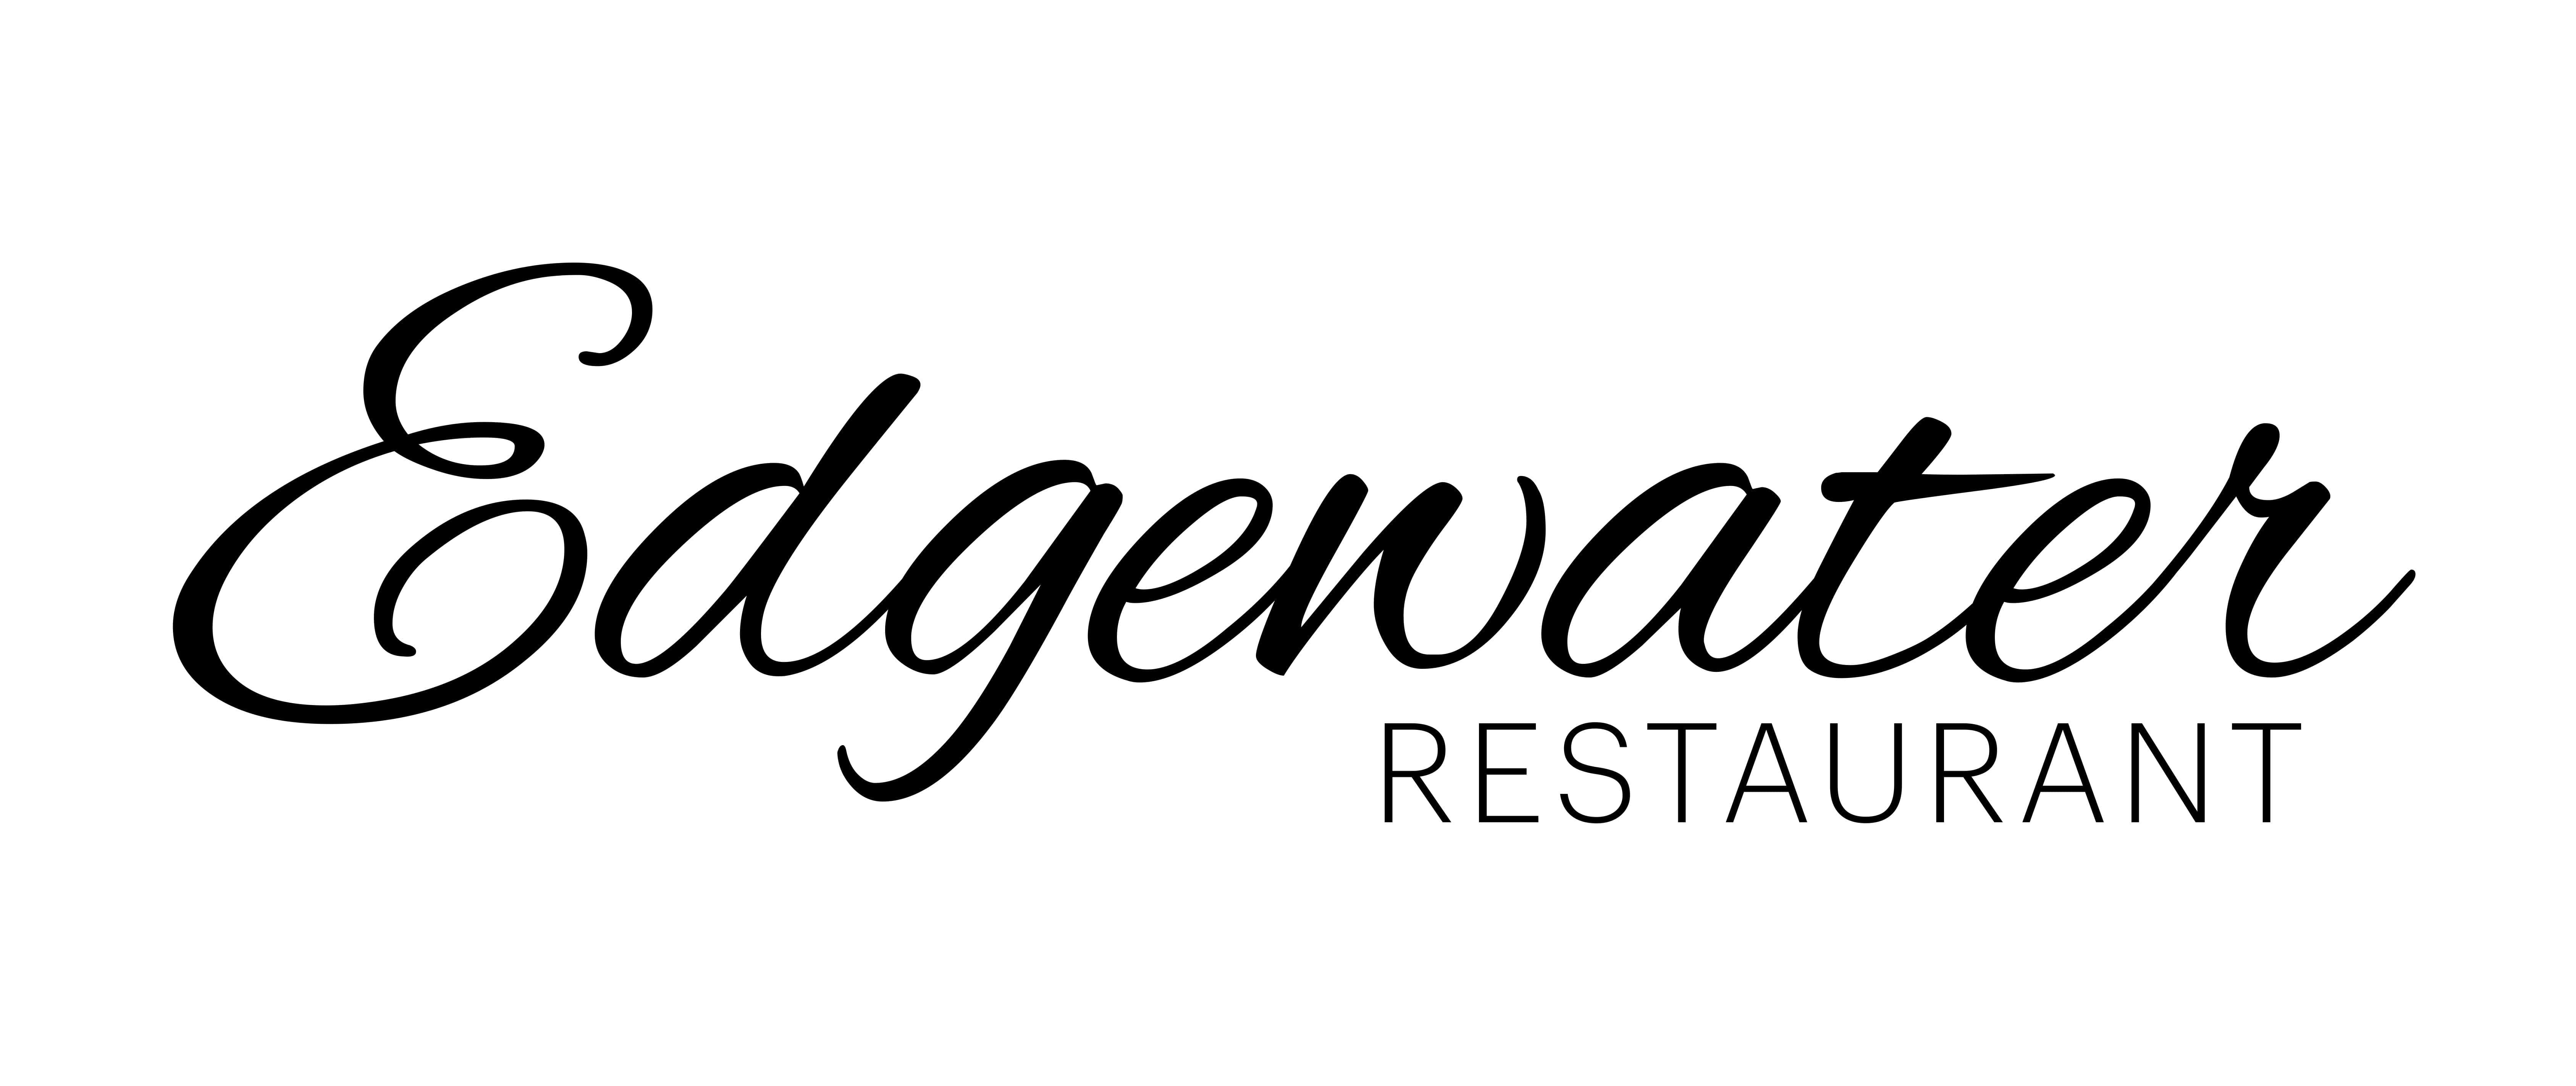 edgewater restaurant logo